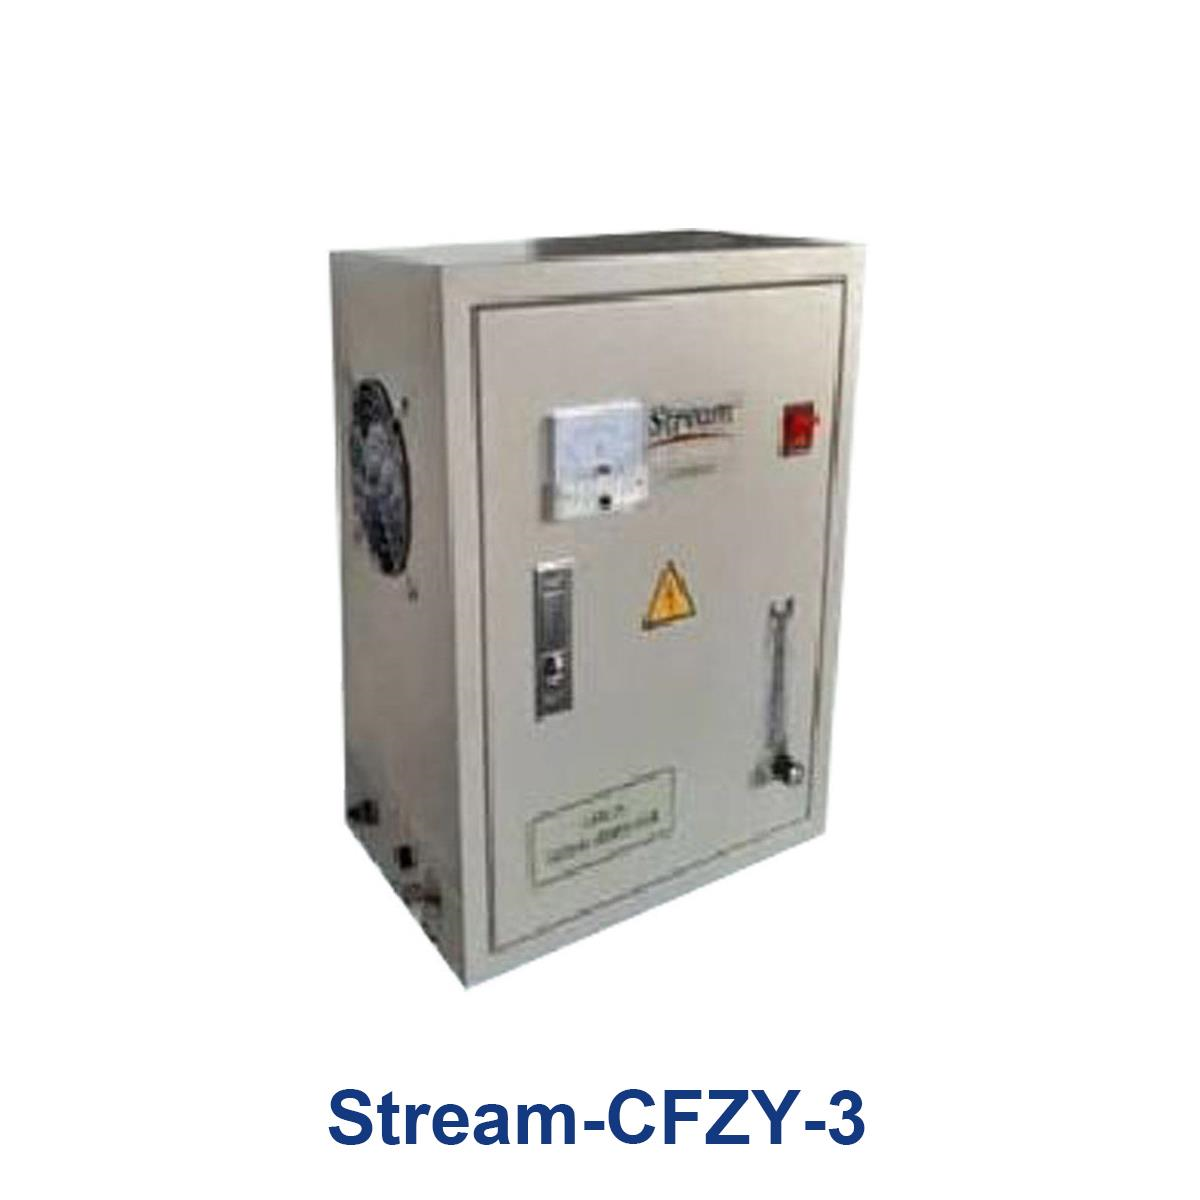 Stream-CFZY-3